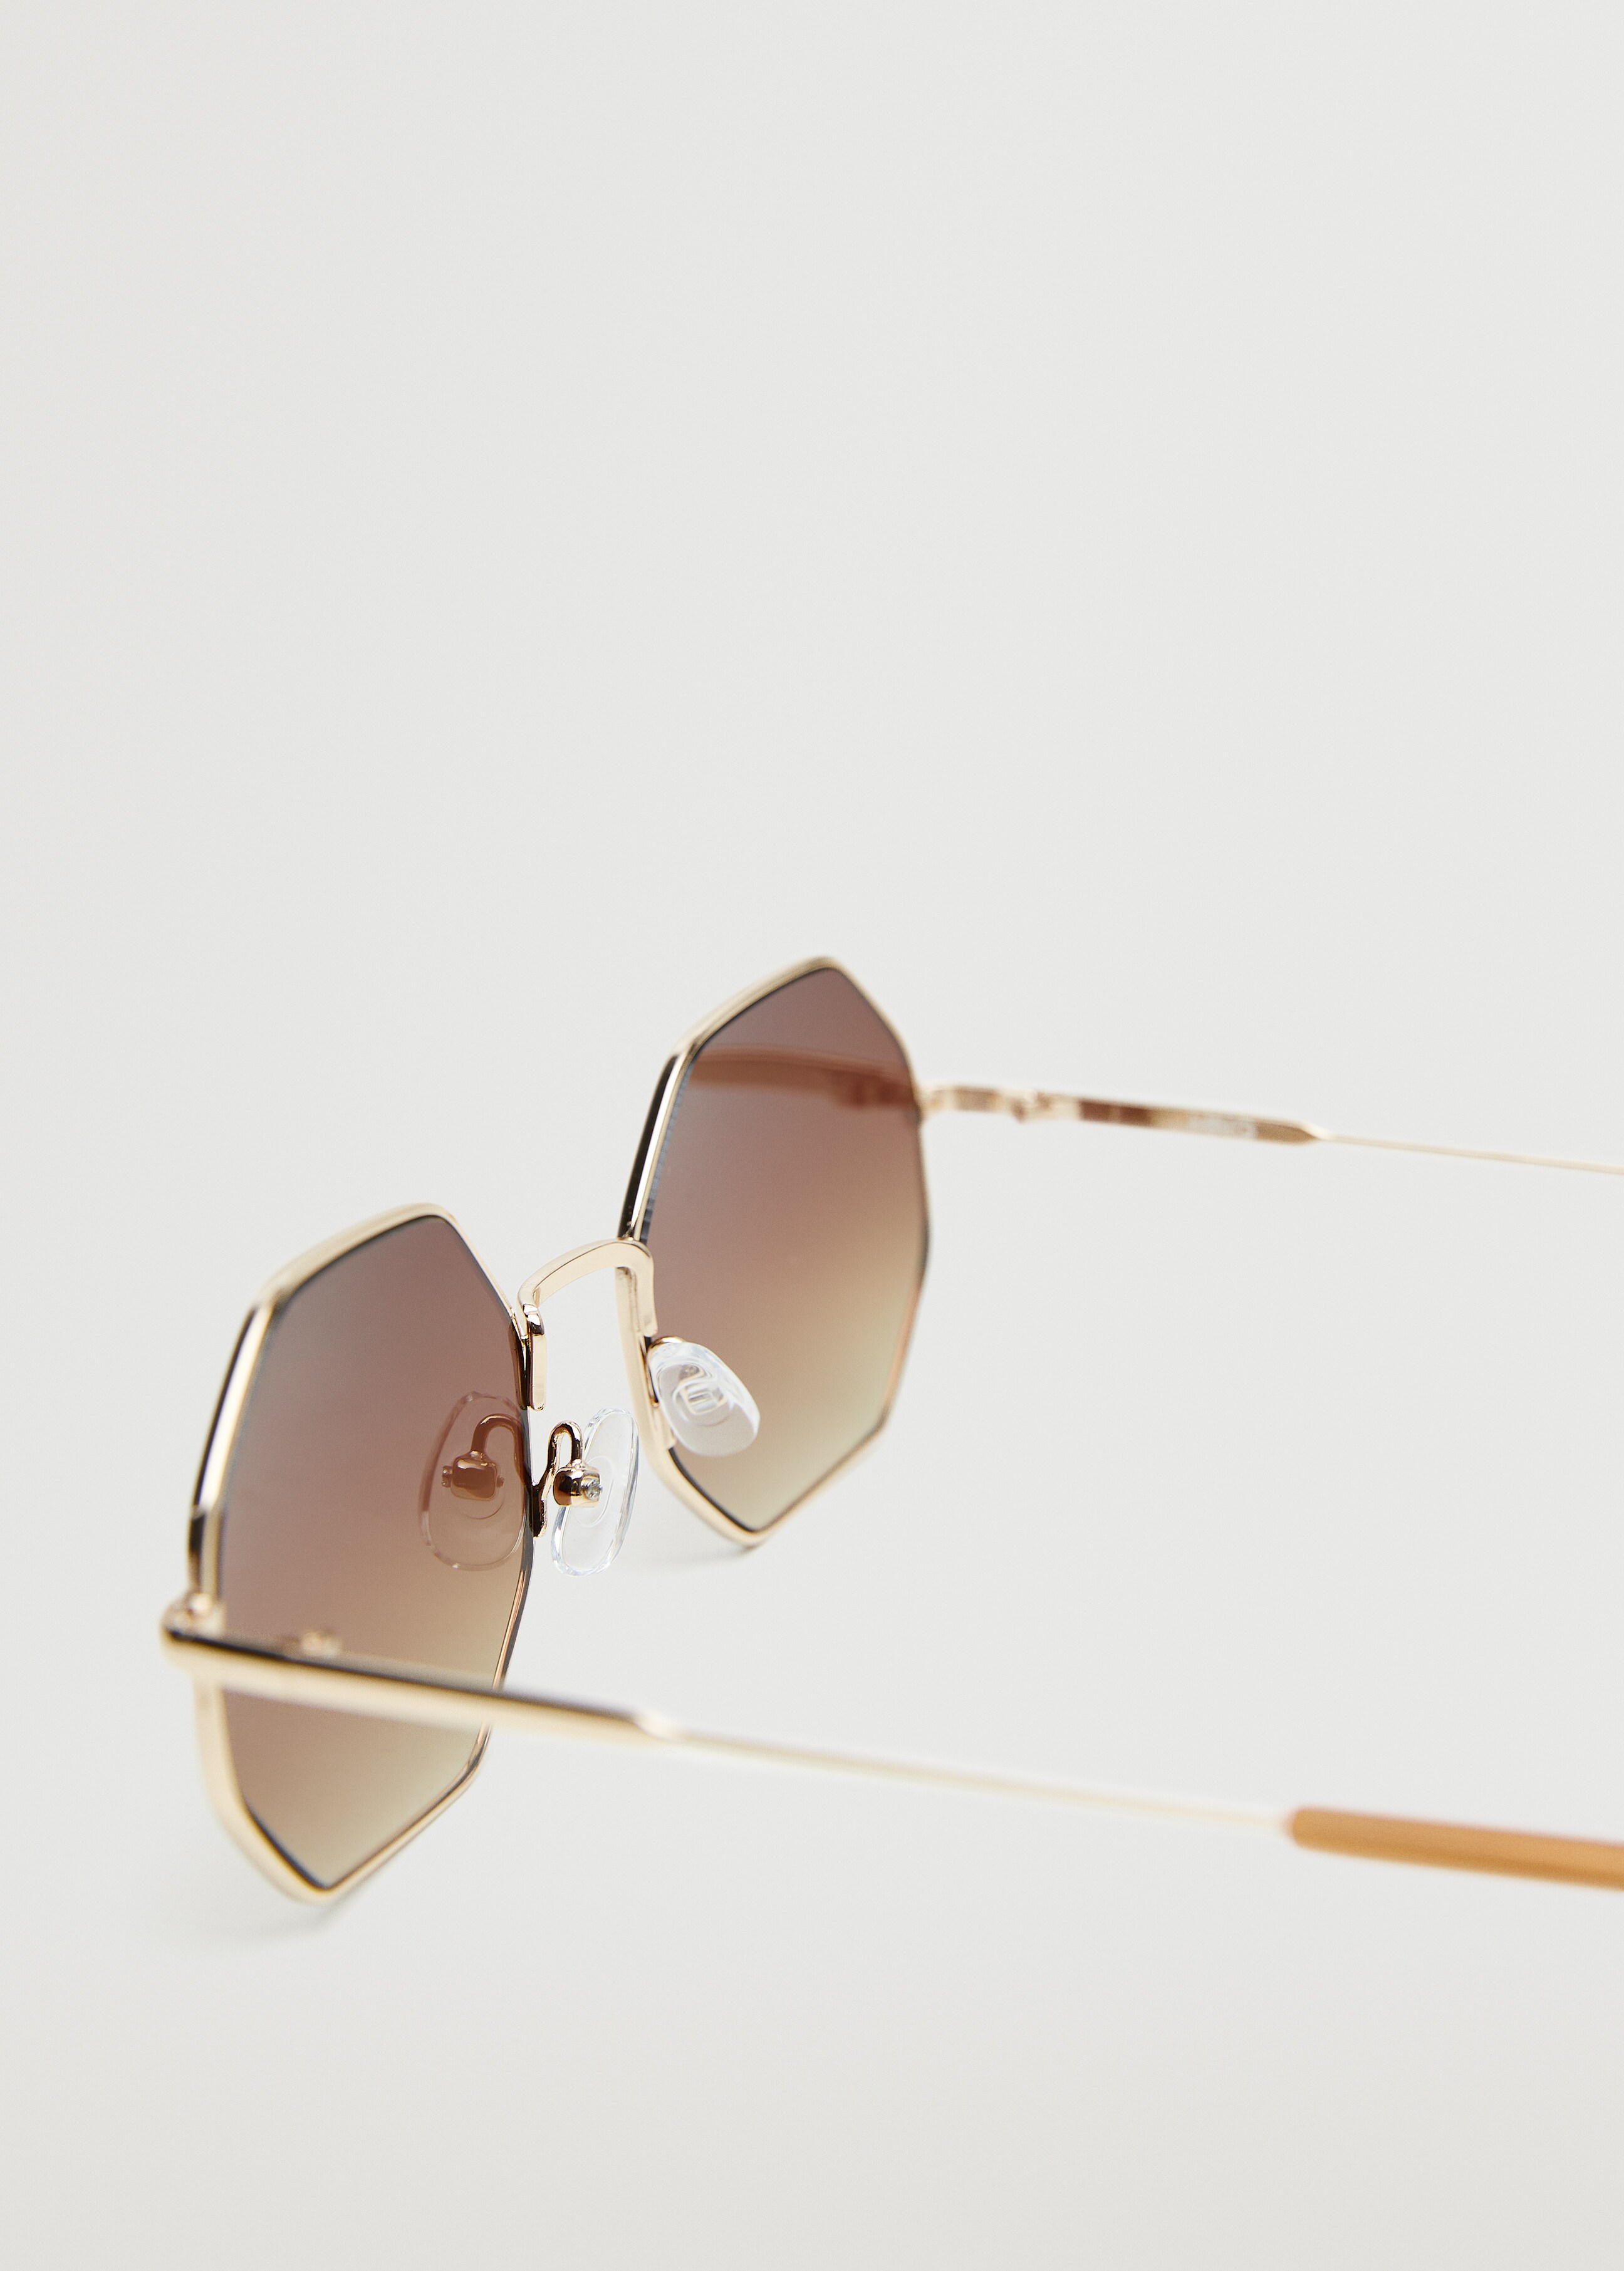 Hexagonal metal frame sunglasses - Medium plane